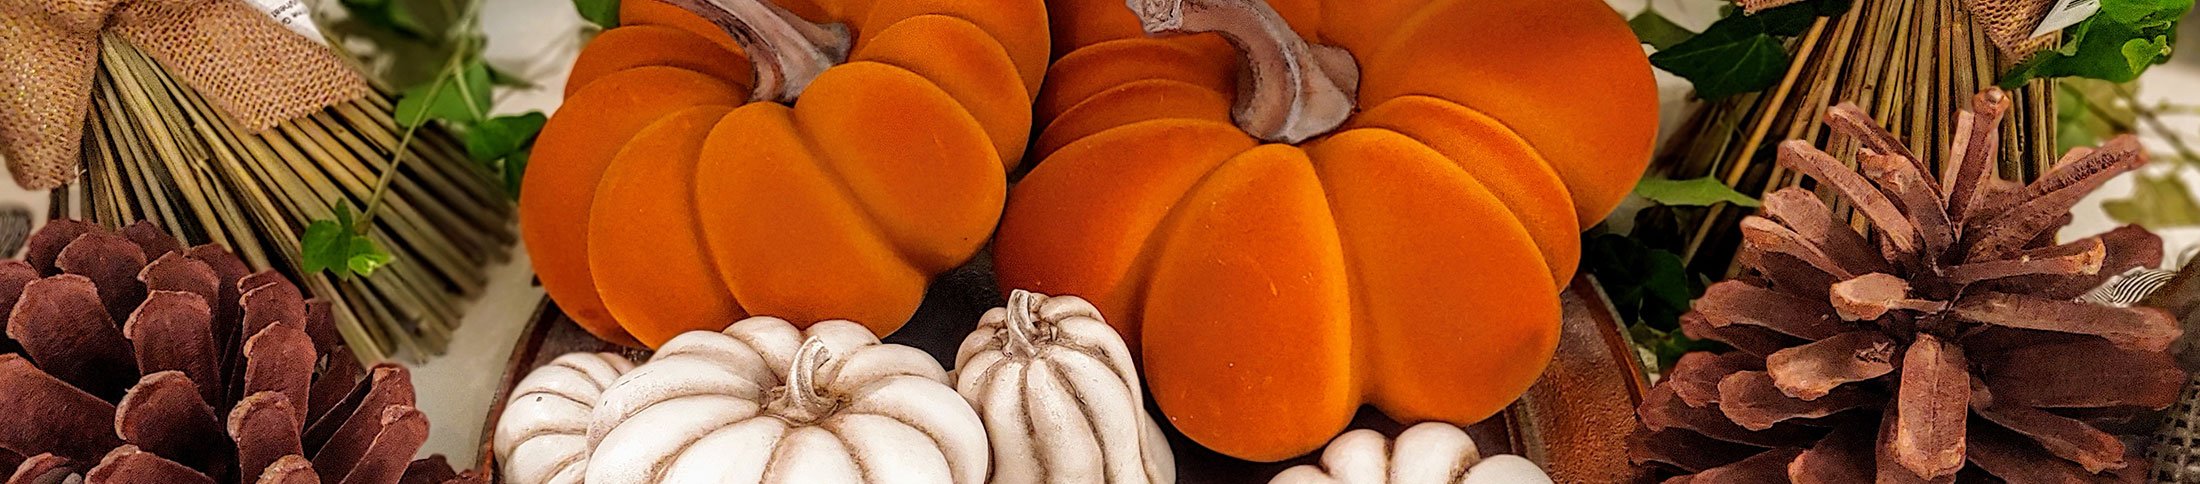 seasonal image with pumpkins